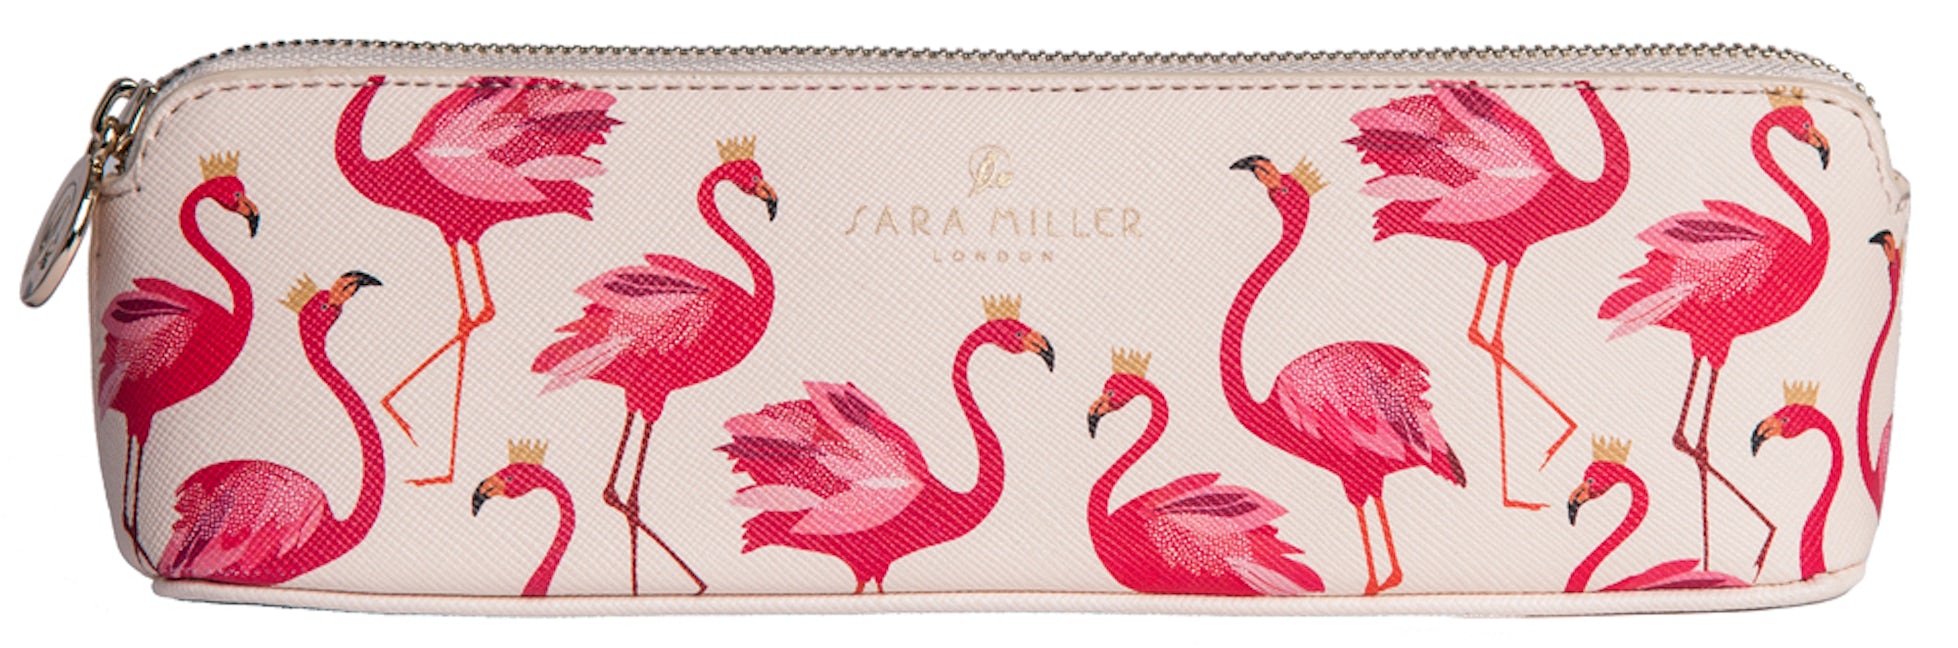 Sara Miller Pencil Case (Flamingo)